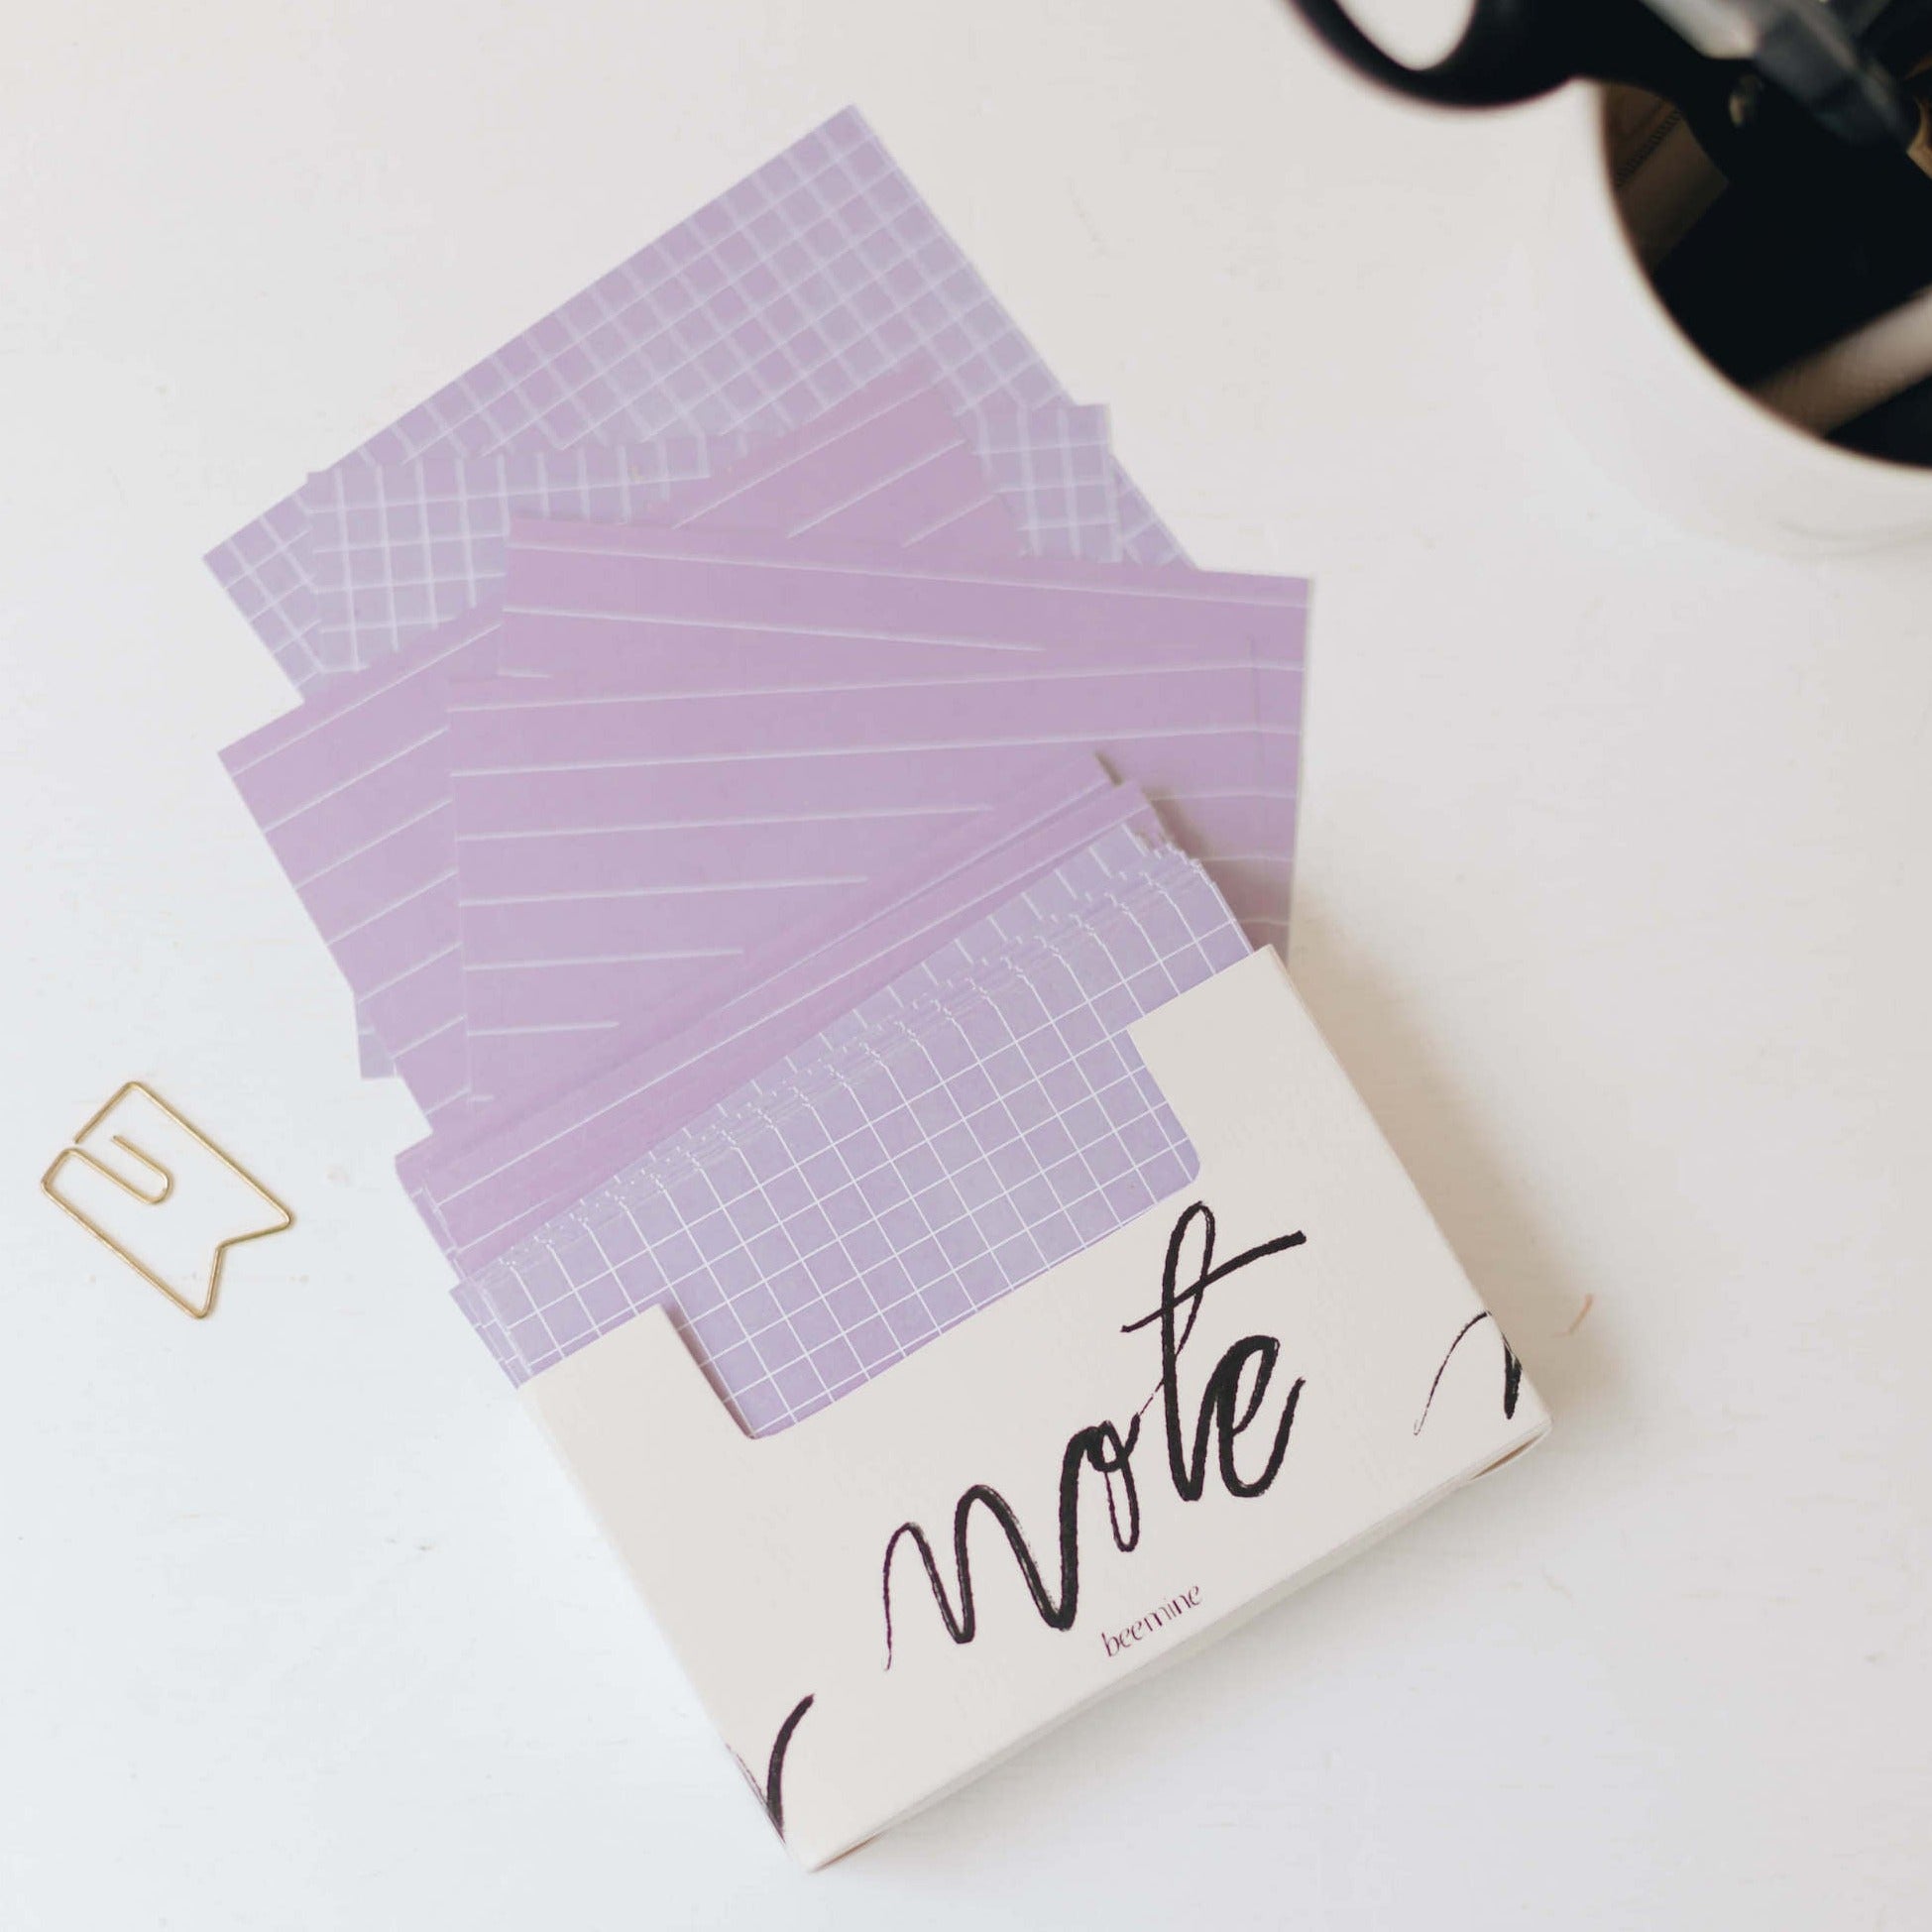 Kit de papéis para anotações Take Note - Bee Mine